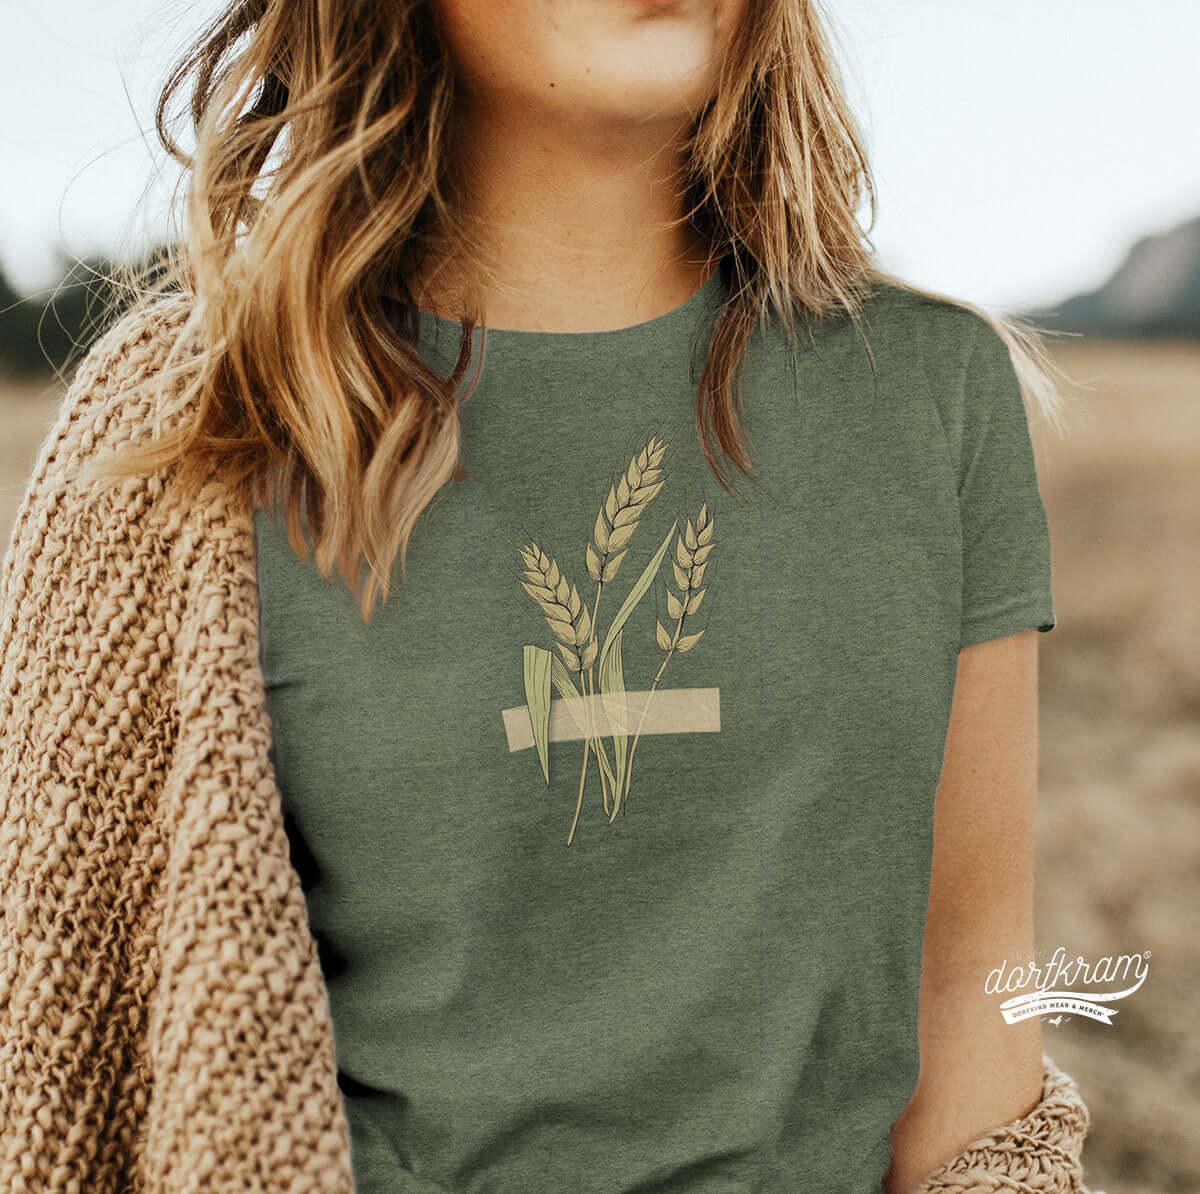 Shirt Ährenfrau Weizen Getreide Landwirtin Shirt Landwirtschaft Dorfkram® oliv